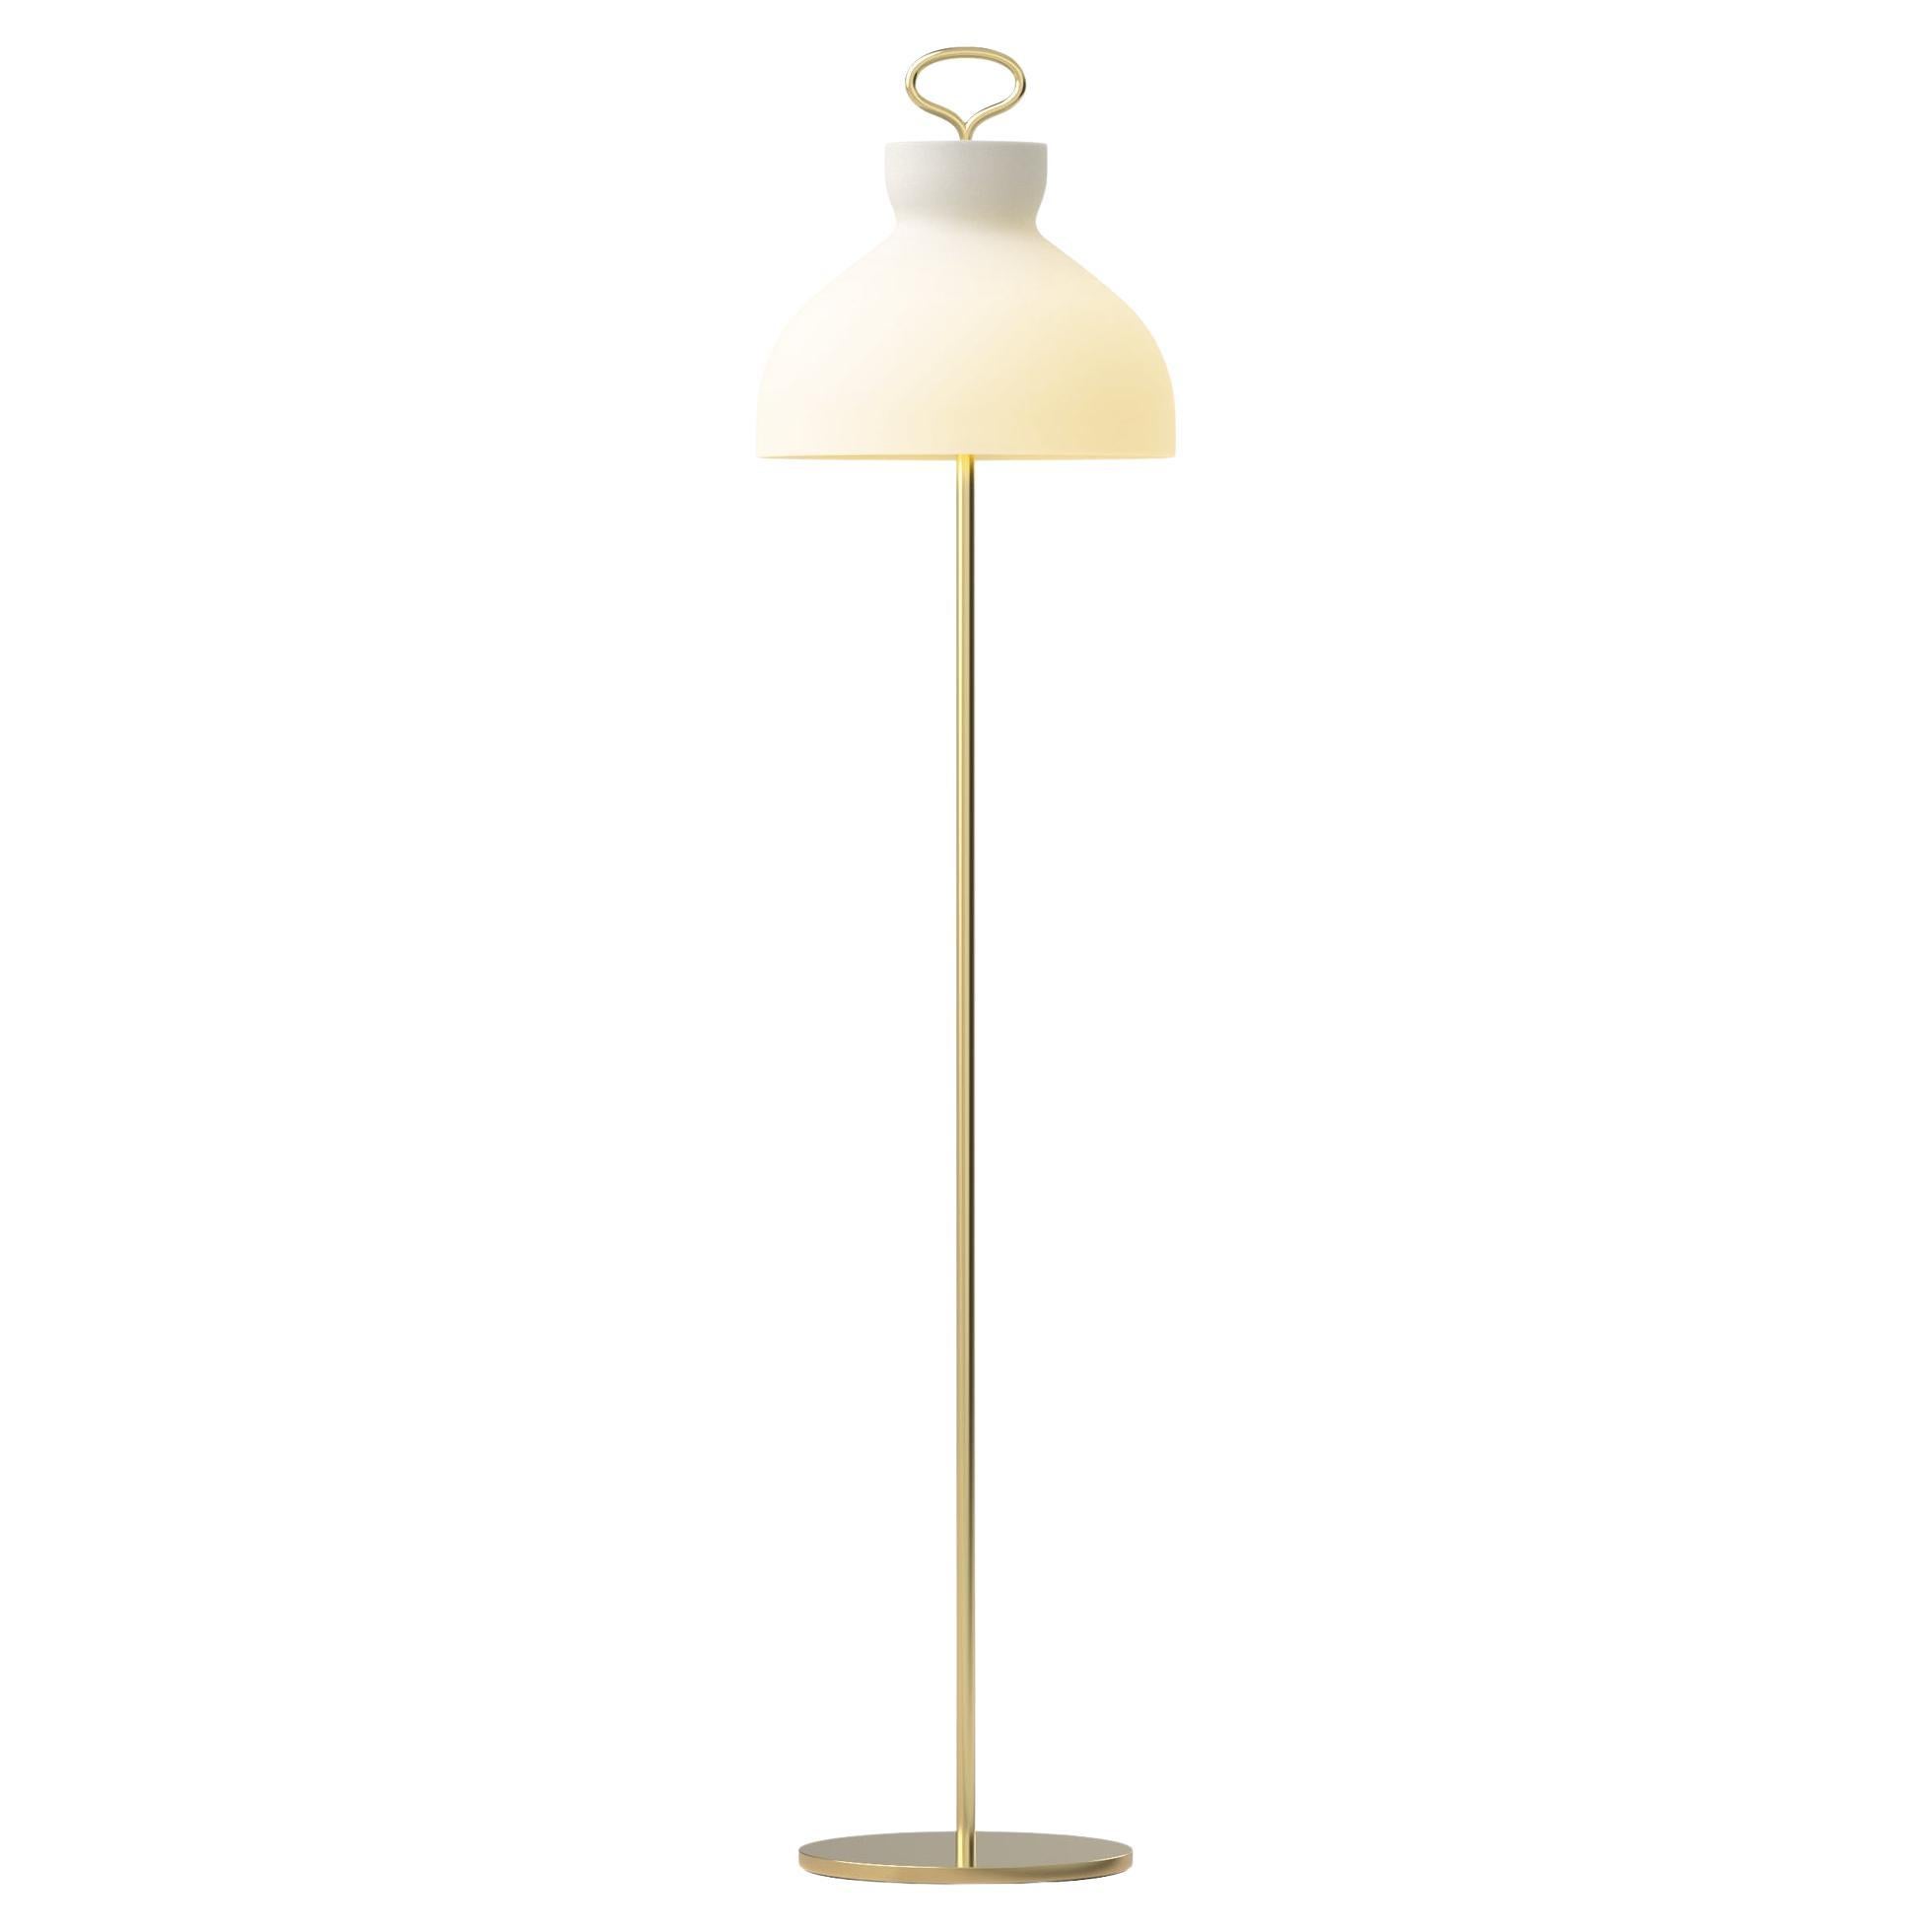 Ignazio Gardella 'Arenzano Terra' Floor Lamp in Brass and Glass